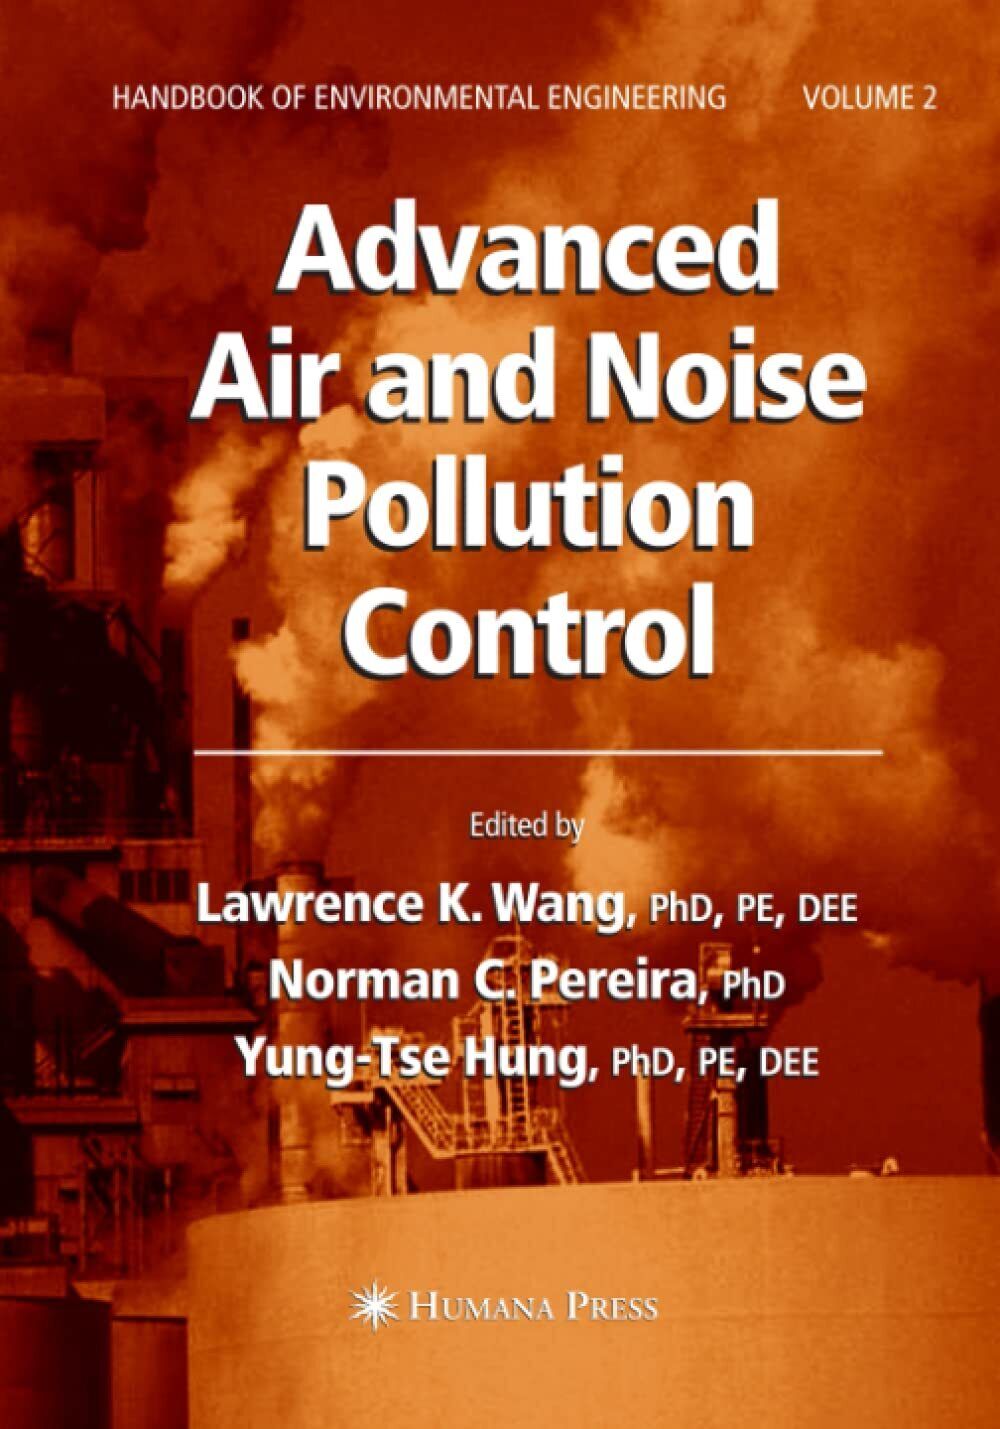 Advanced Air and Noise Pollution Control: Volume 2 - Springer, 2010 libro usato